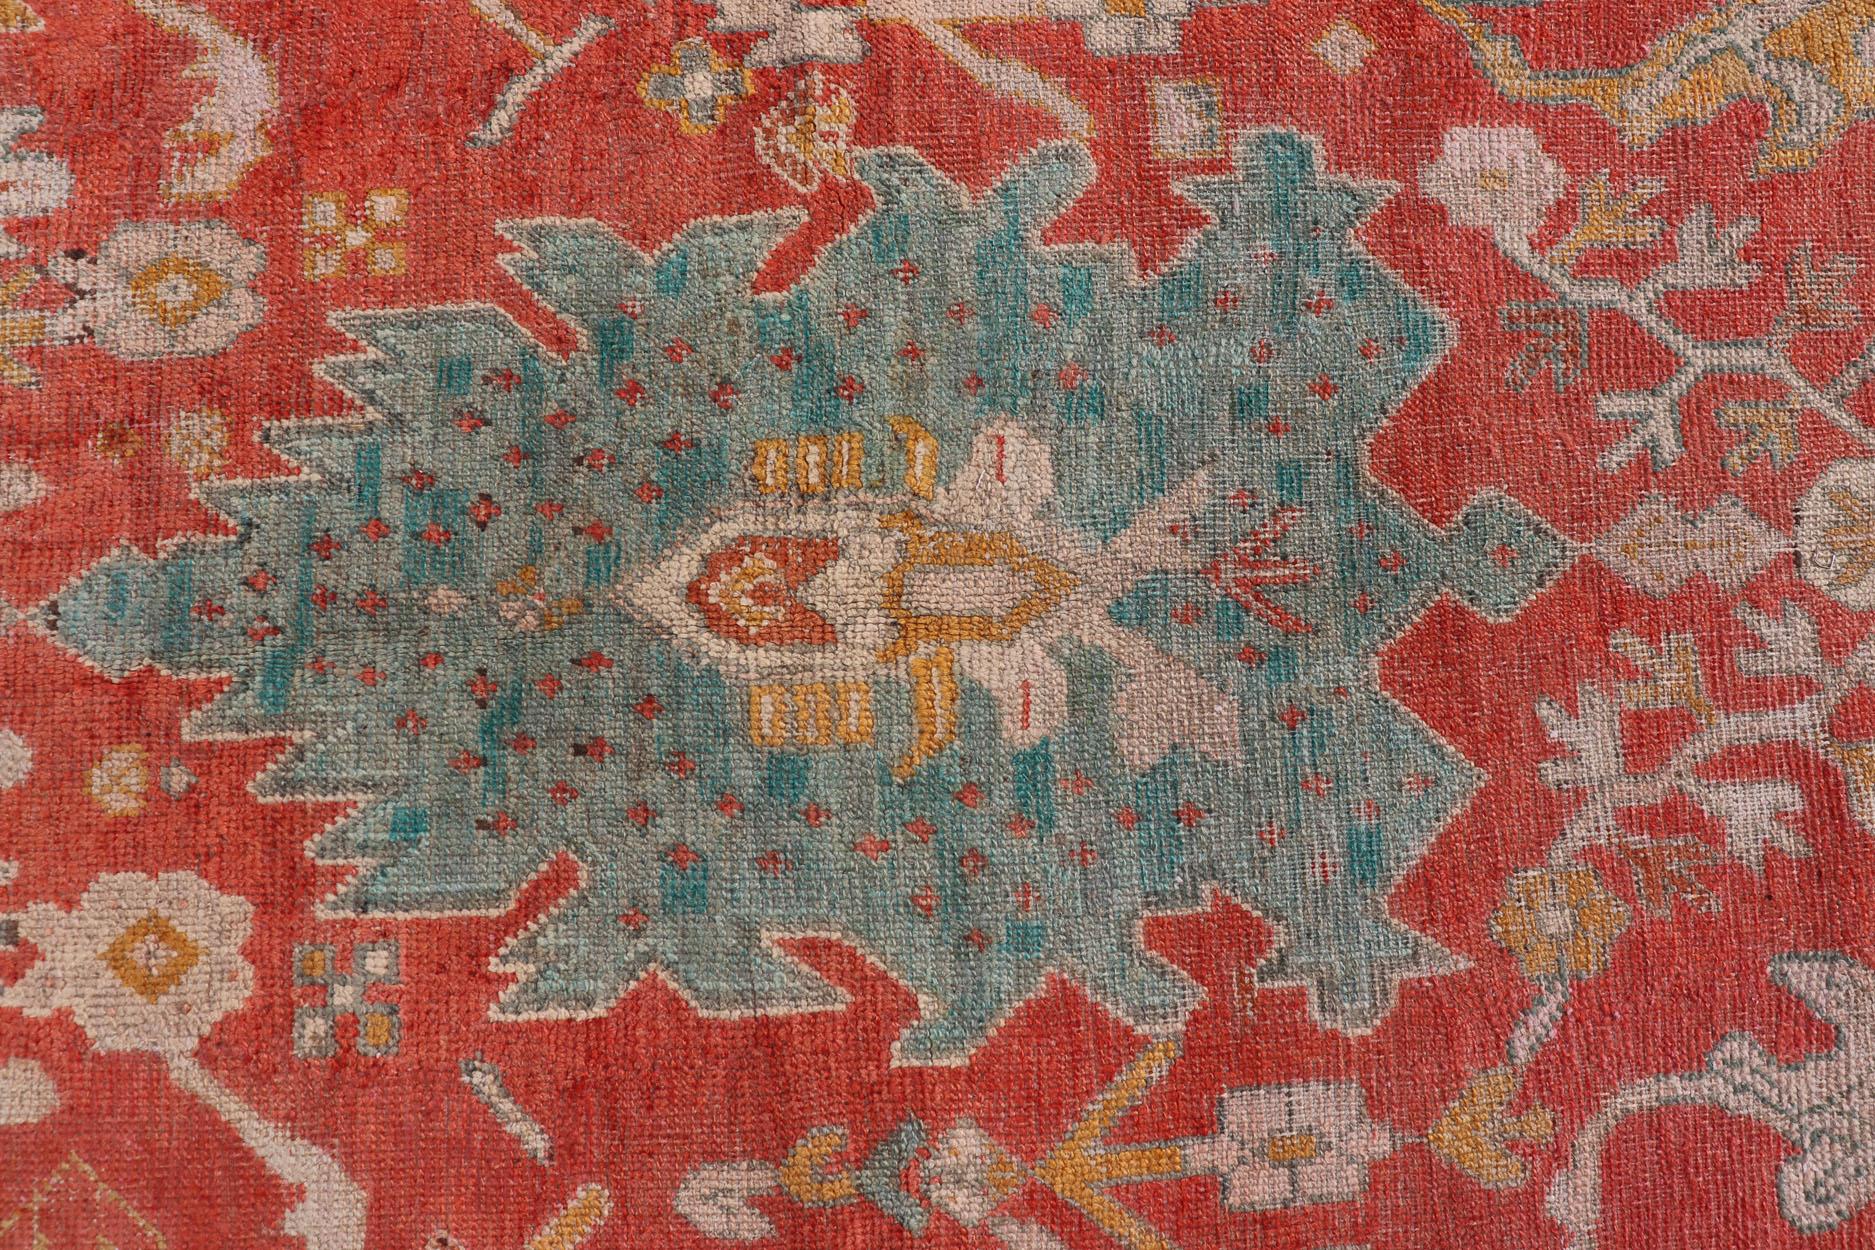 Antique Turkish Oushak rug with tribal Medallion design in terracotta, blue, cream, and marigold. Keivan Woven Arts / rug / 17-1108-K-105, country of origin / type: Turkey / Oushak, circa 1900
Measures: 9'7 x 14'9
This beautiful 19th century Oushak,